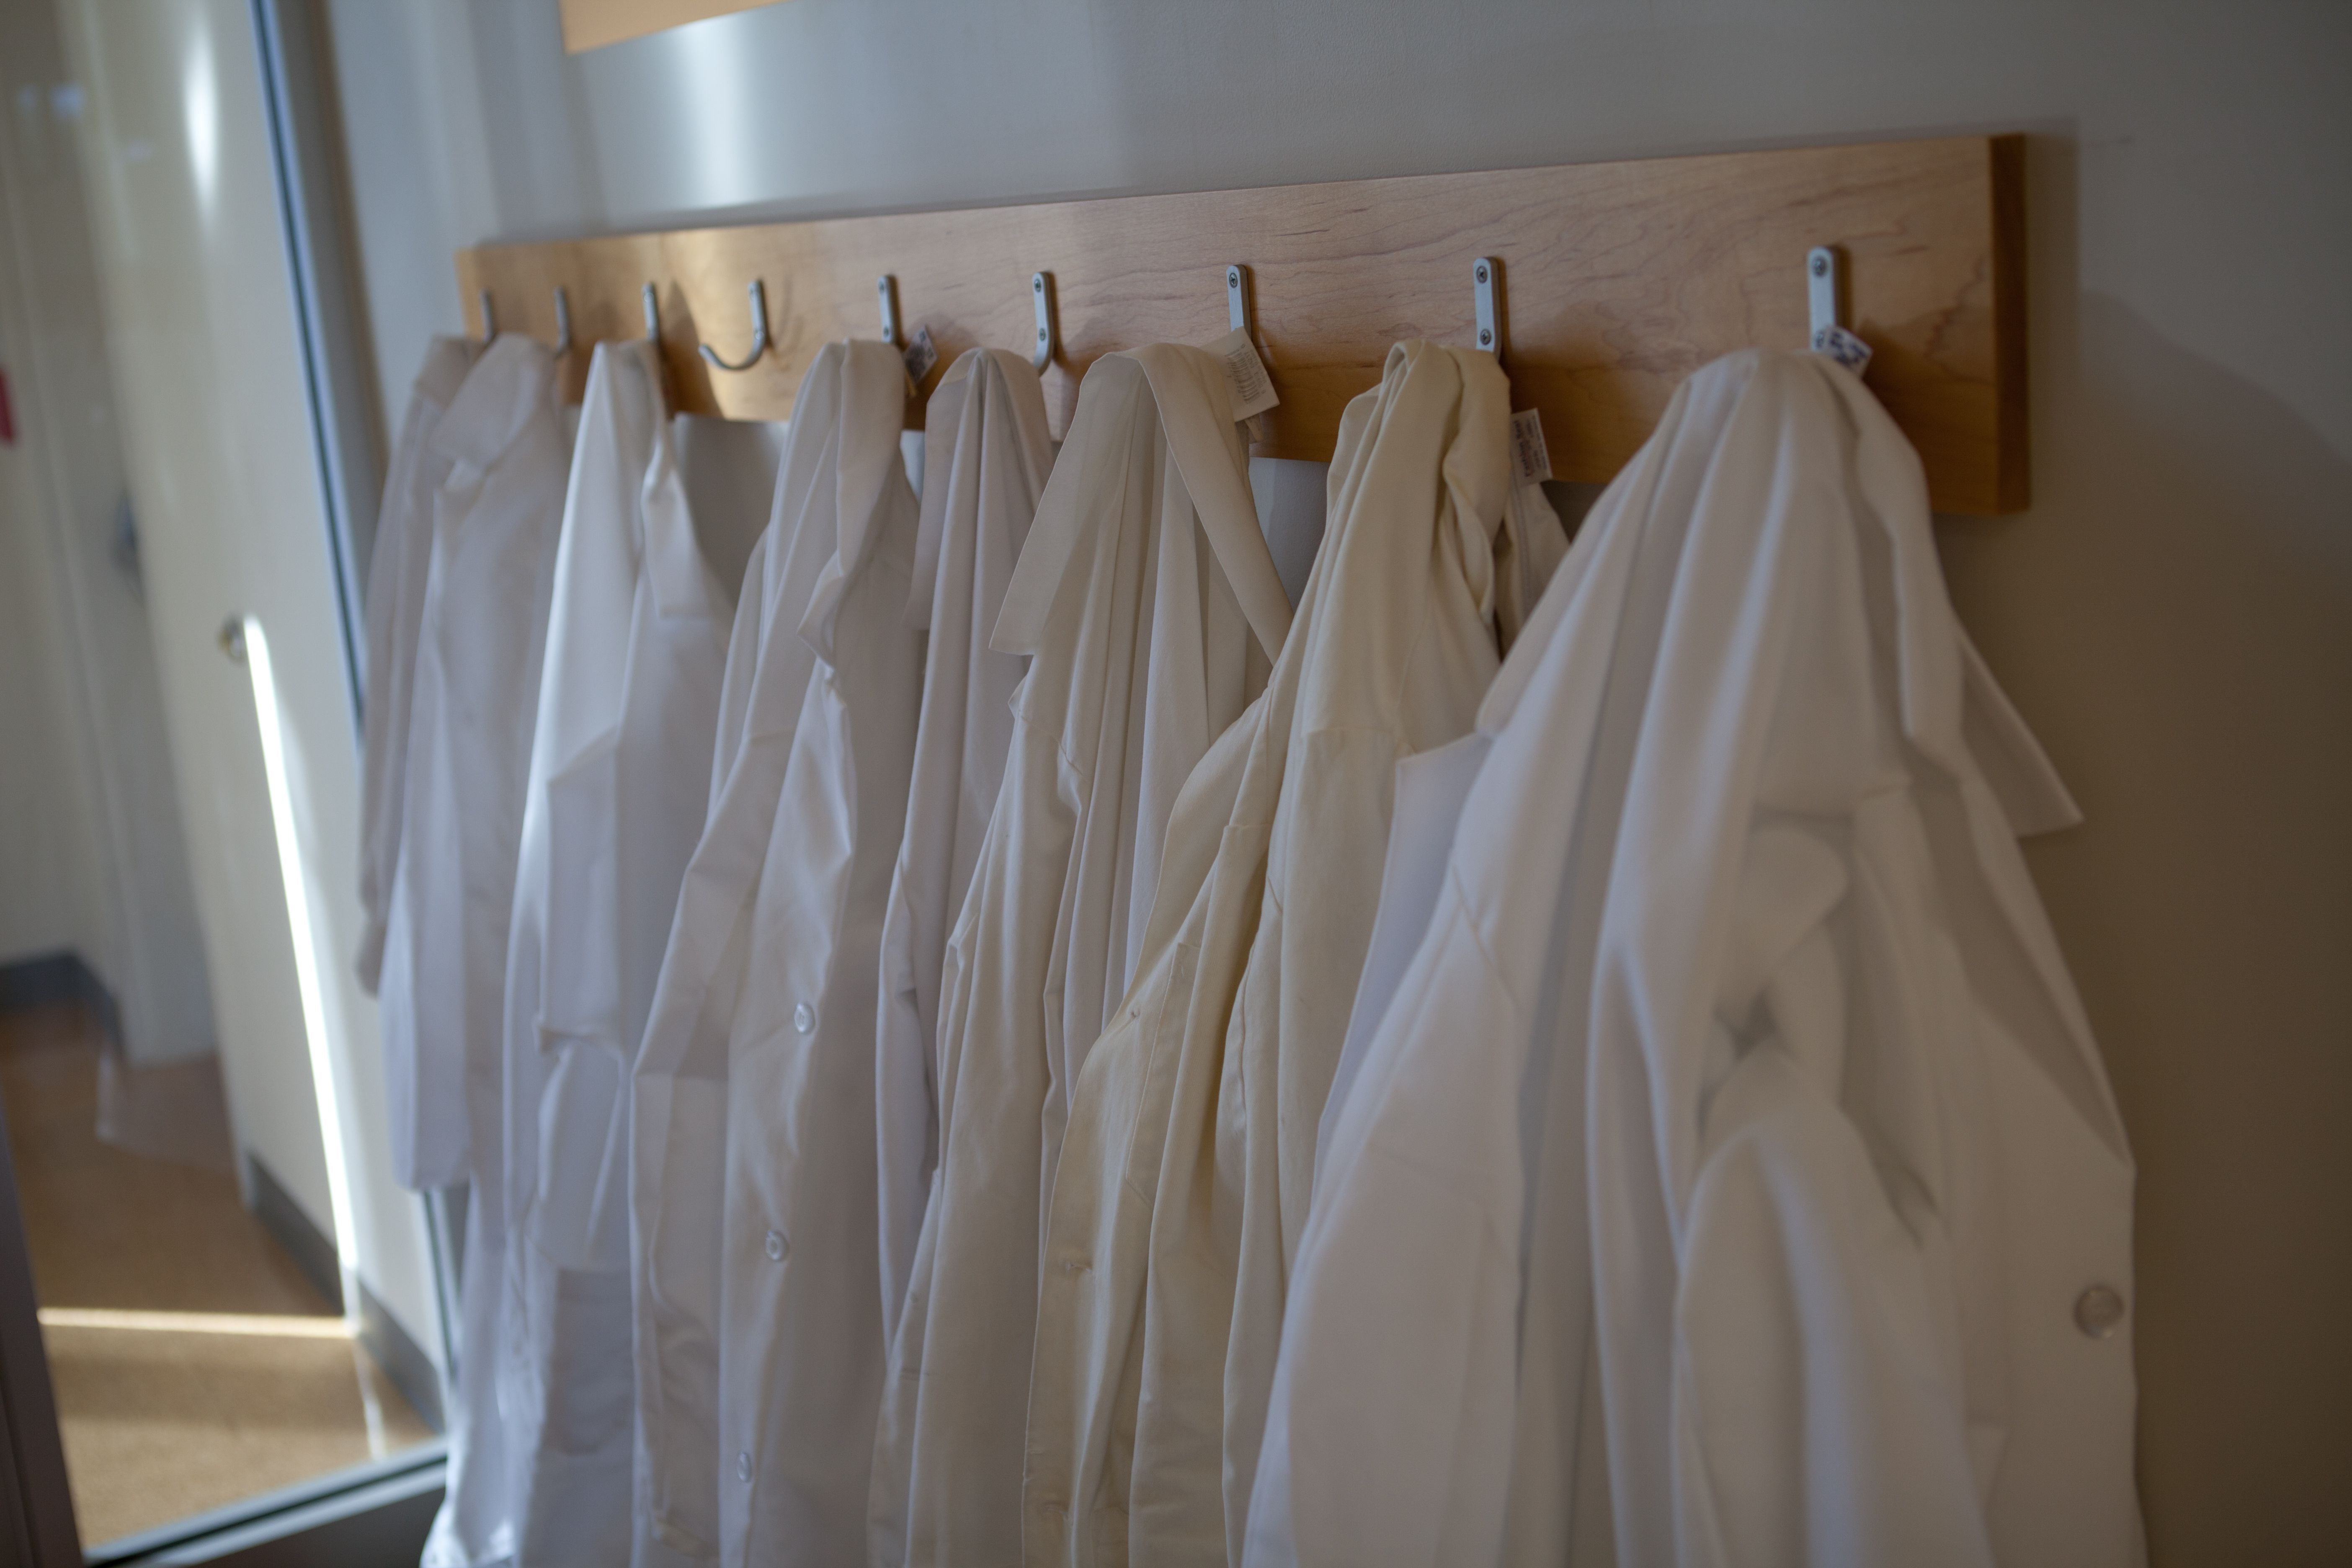 Hanging white lab coats